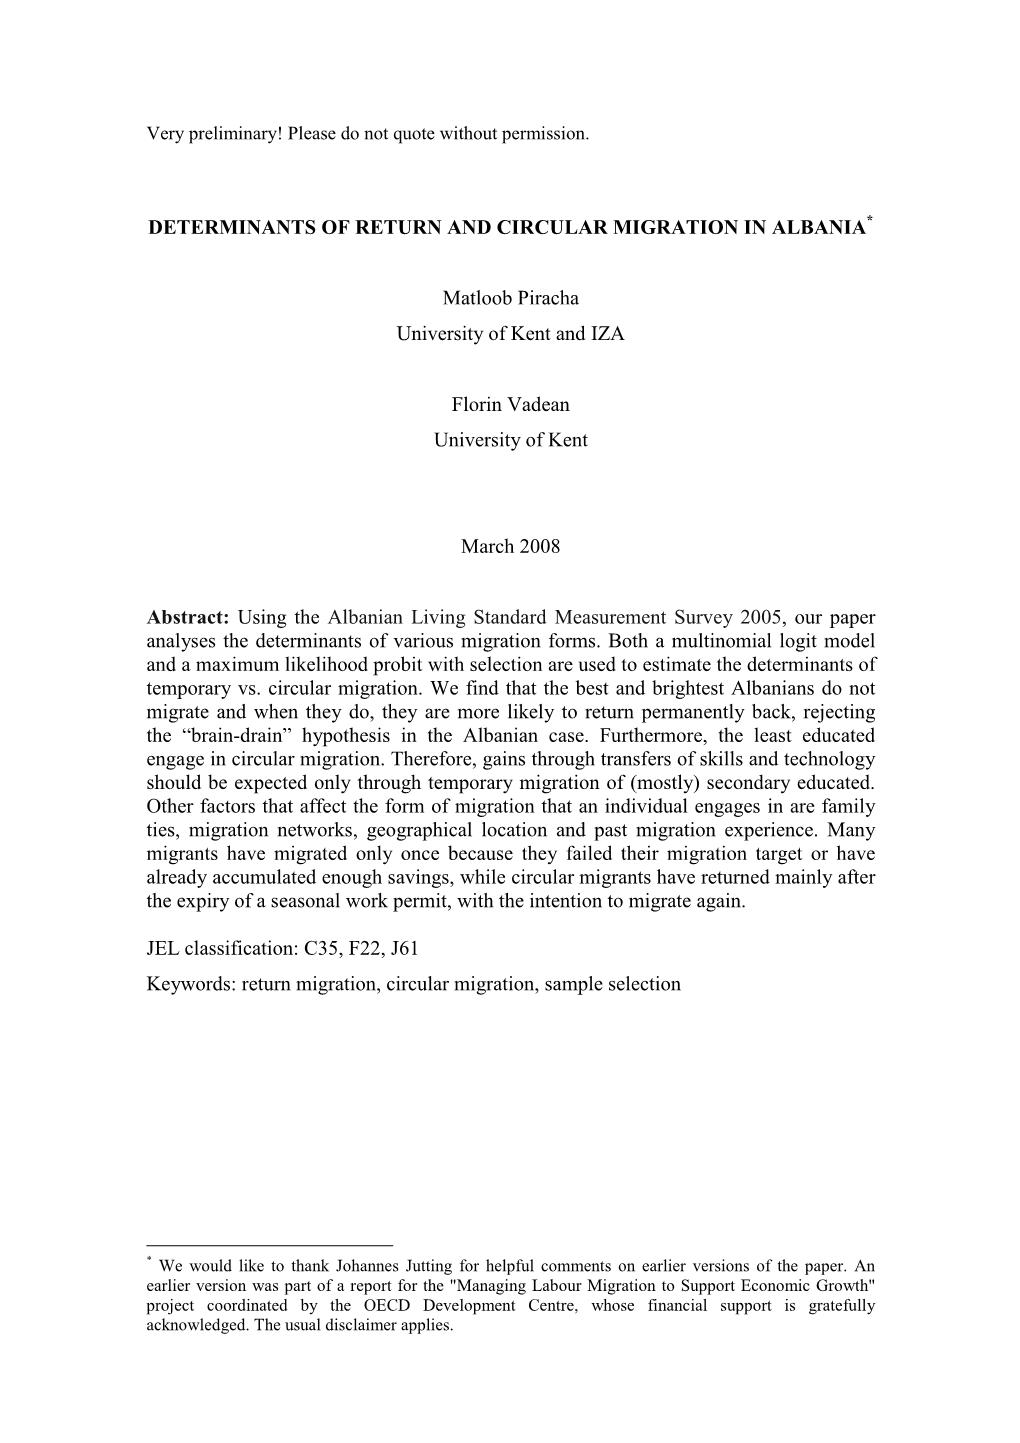 Determinants of Return and Circular Migration in Albania *